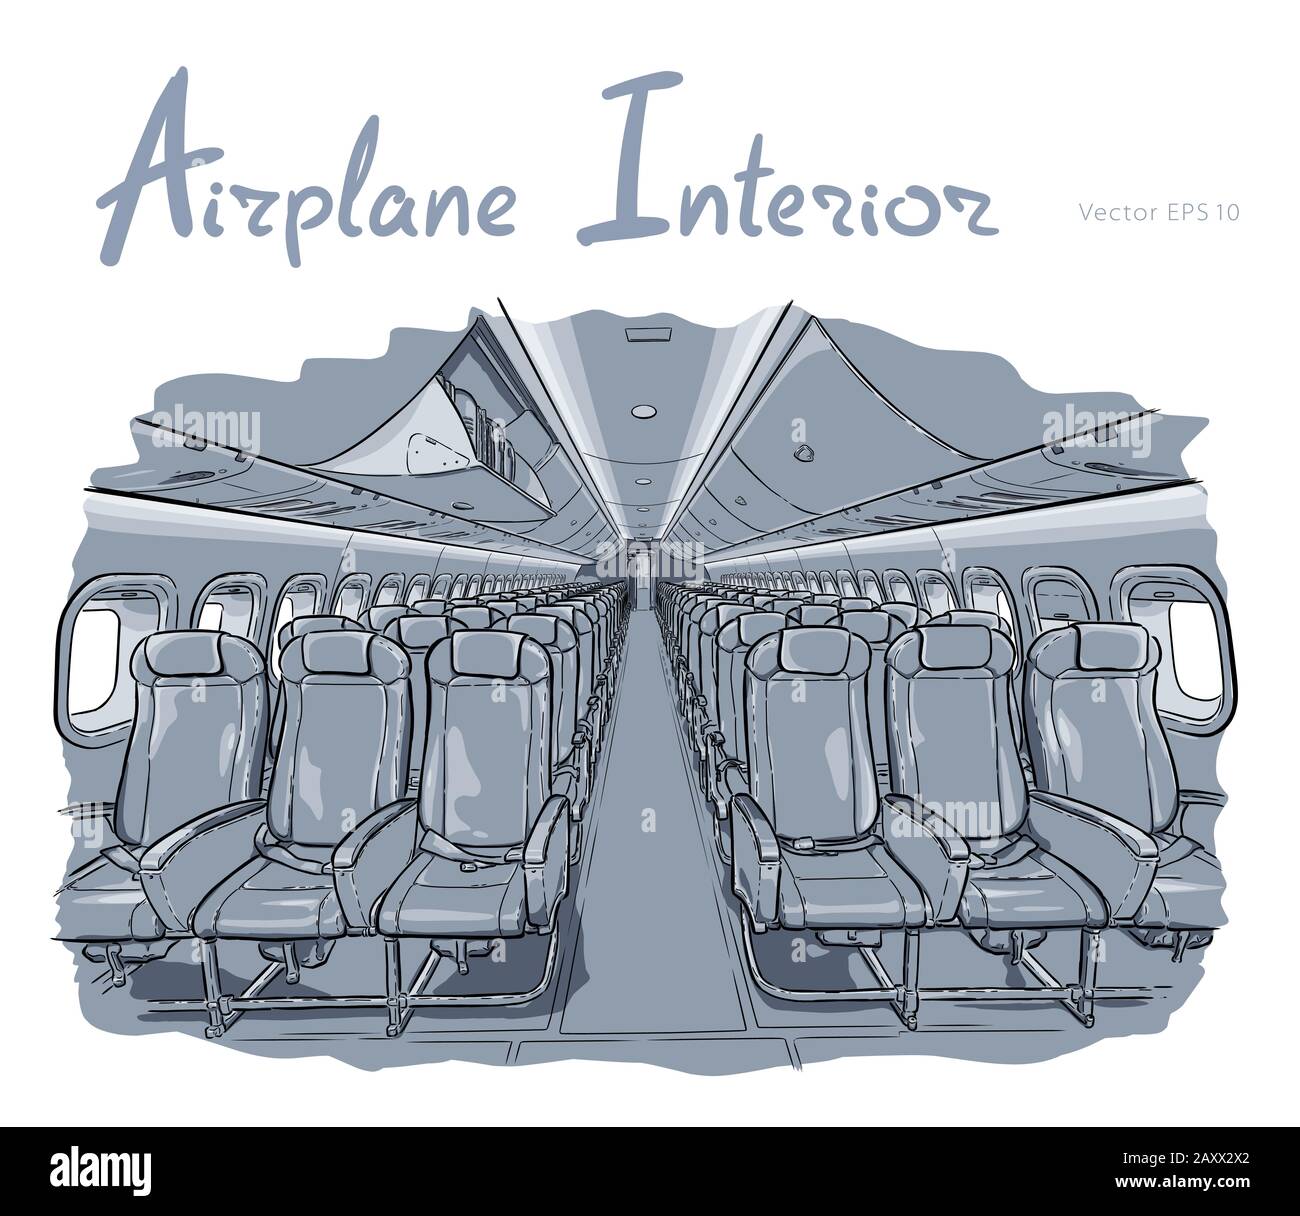 Airplane interior hand drawn sketch vector illustration Stock Vector